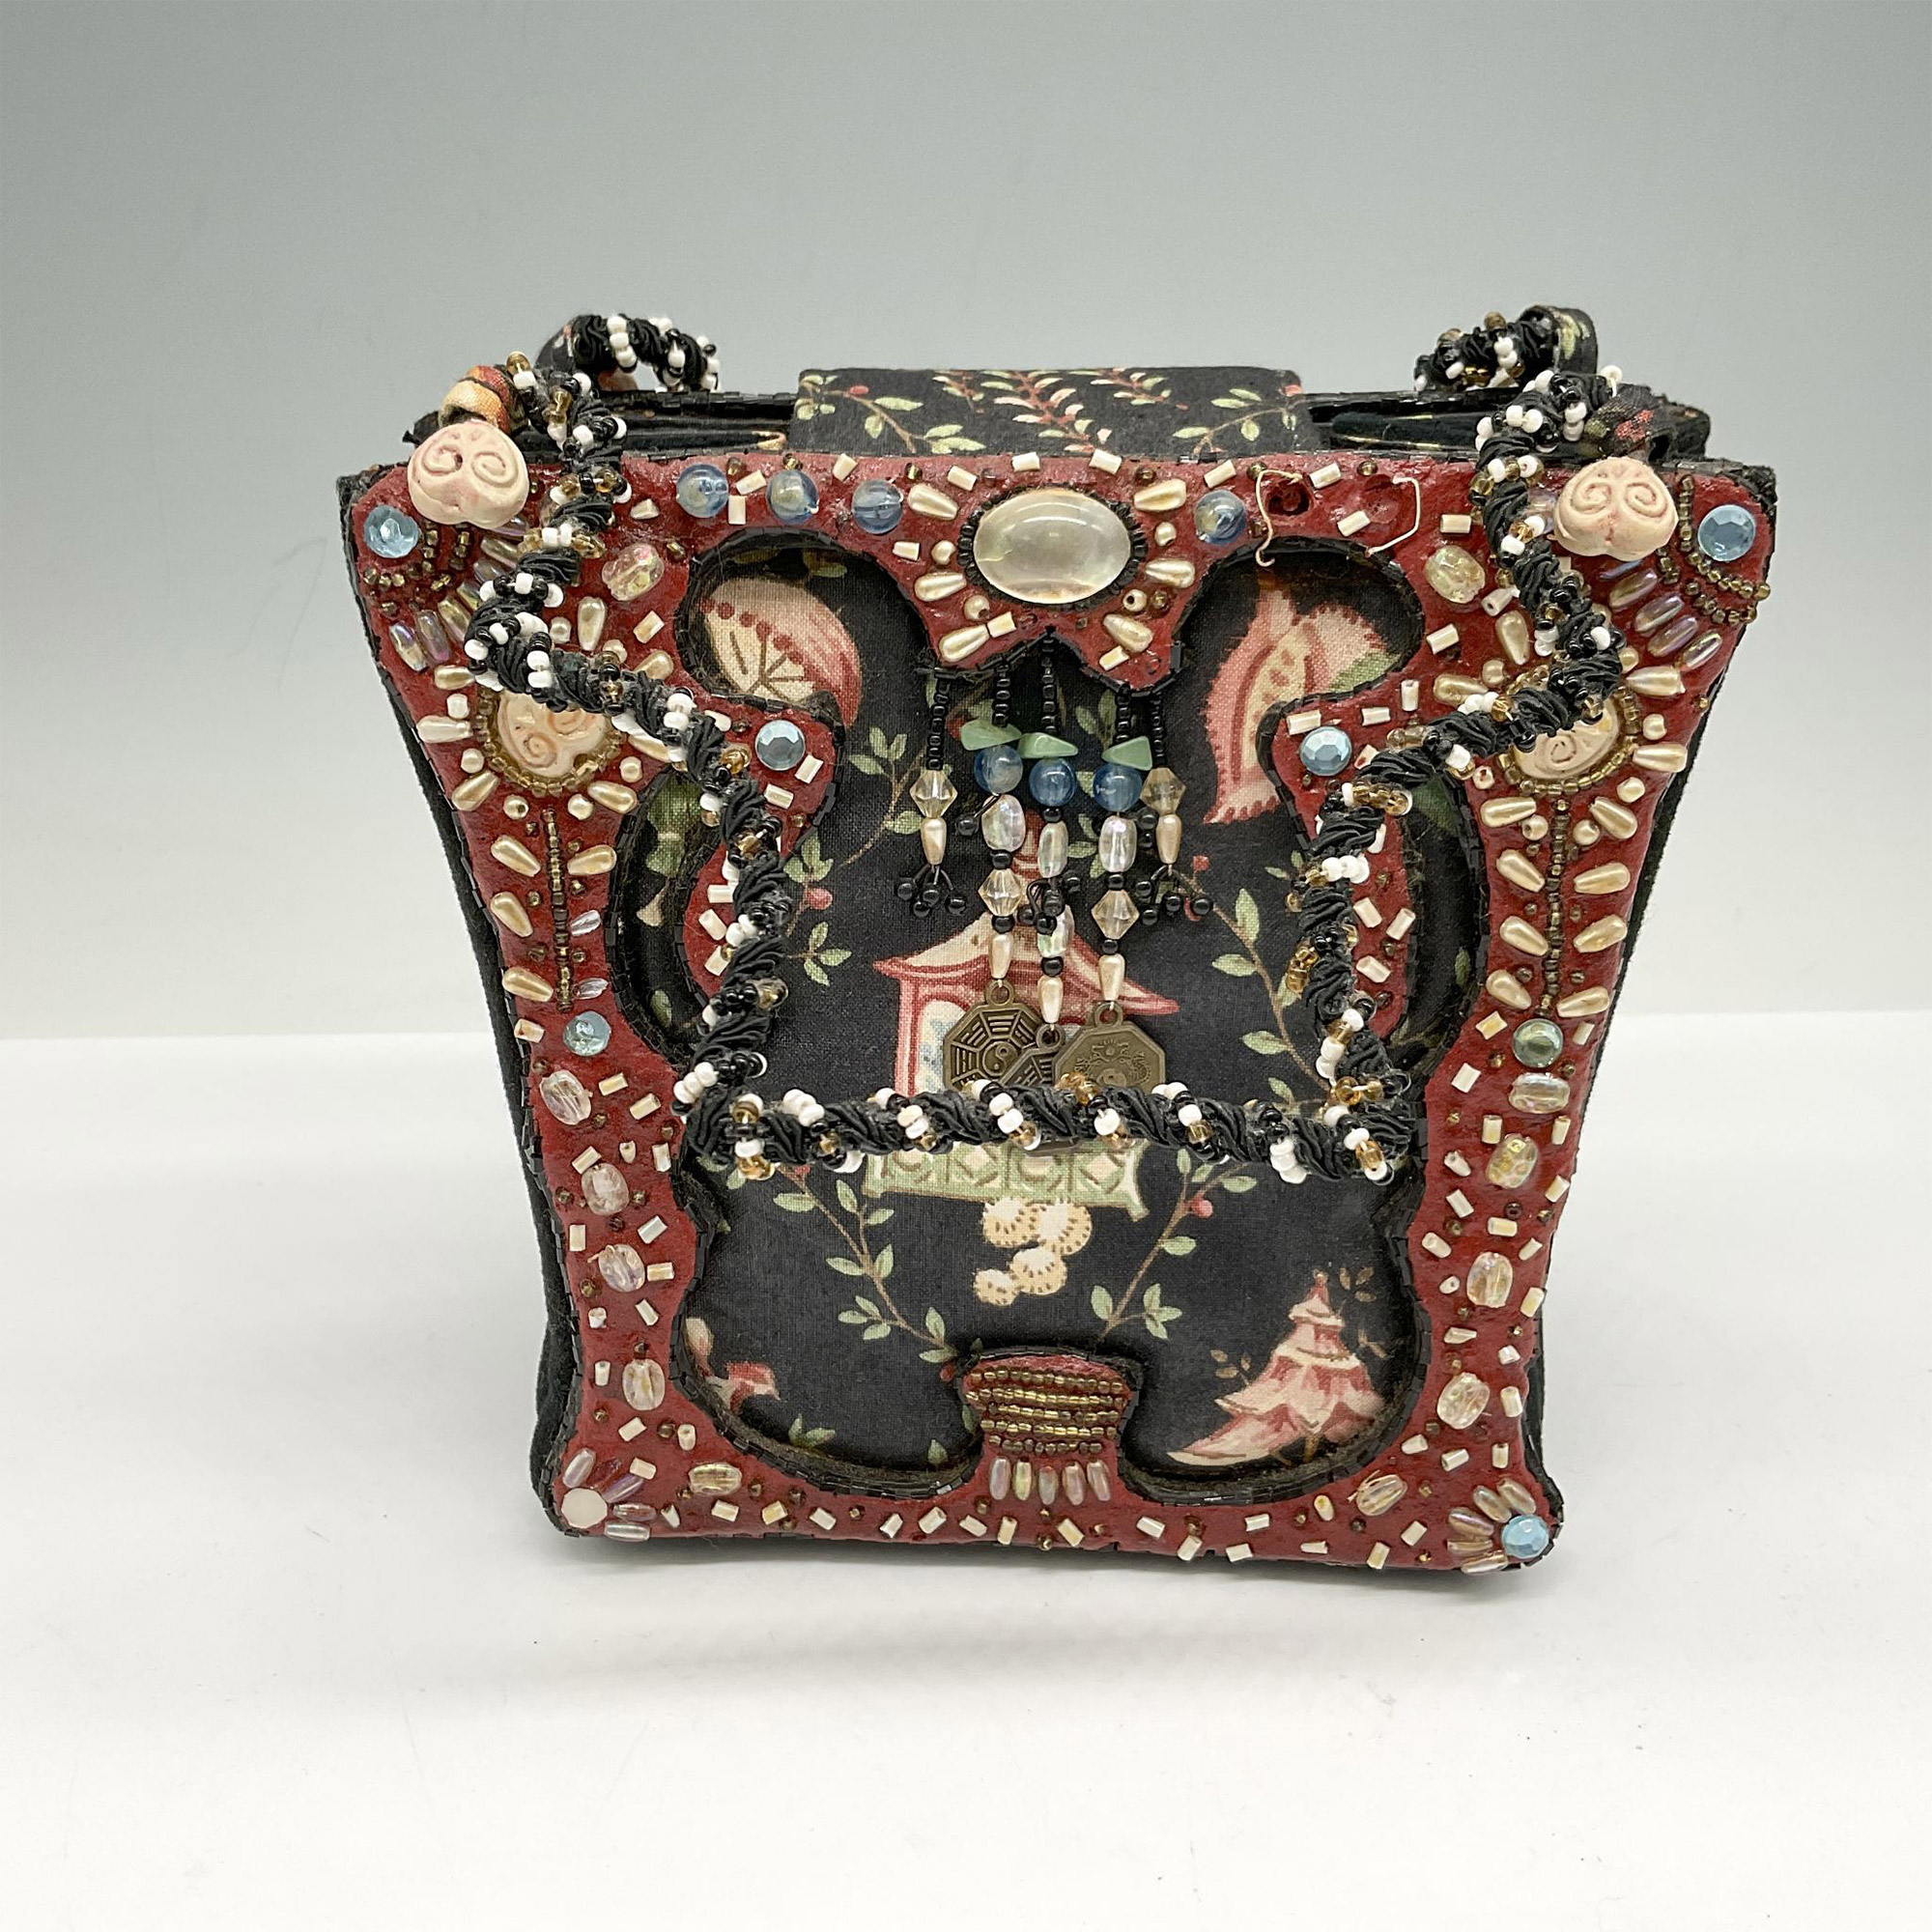 Mary Francis Fabric and Beaded Handbag - Image 2 of 3